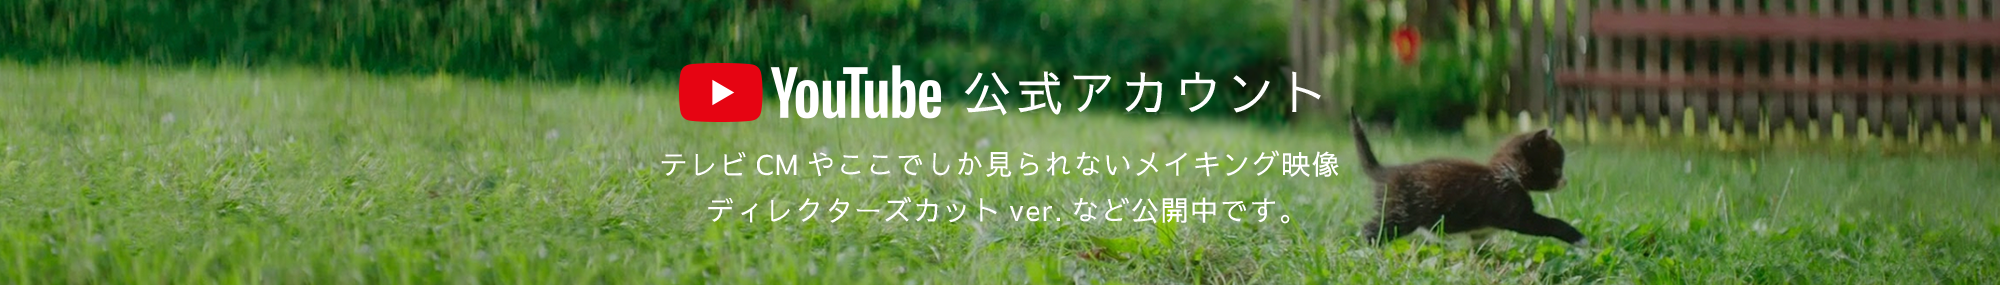 YouTube公式アカウント テレビCMやここでしか見られないメイキング映像 ディレクターズカットver.など公開中です。